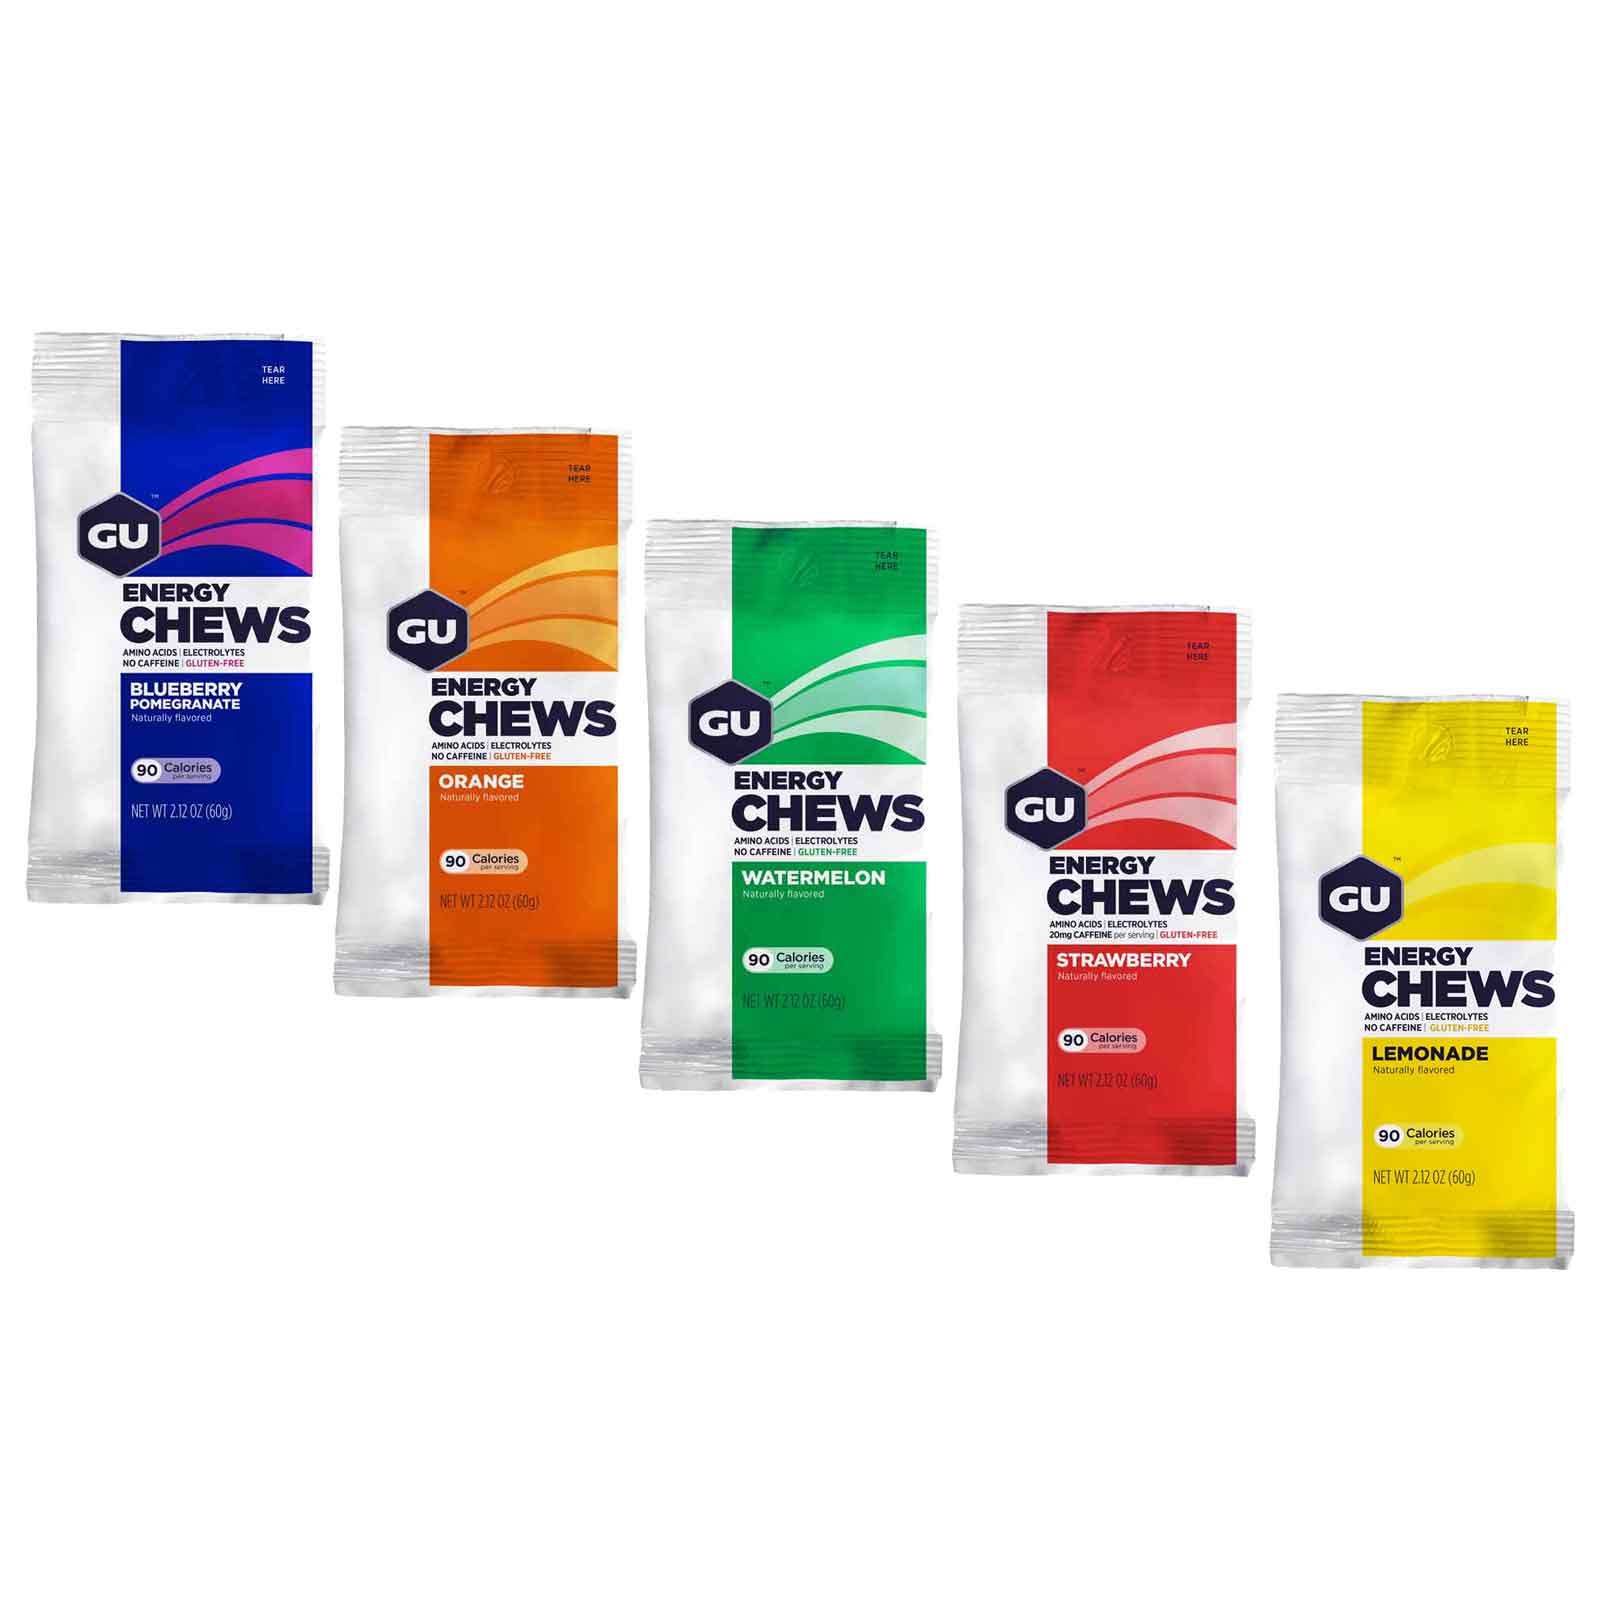 Productfoto van GU Energy Chews - Fruitgom met Koolhydraten - 60g